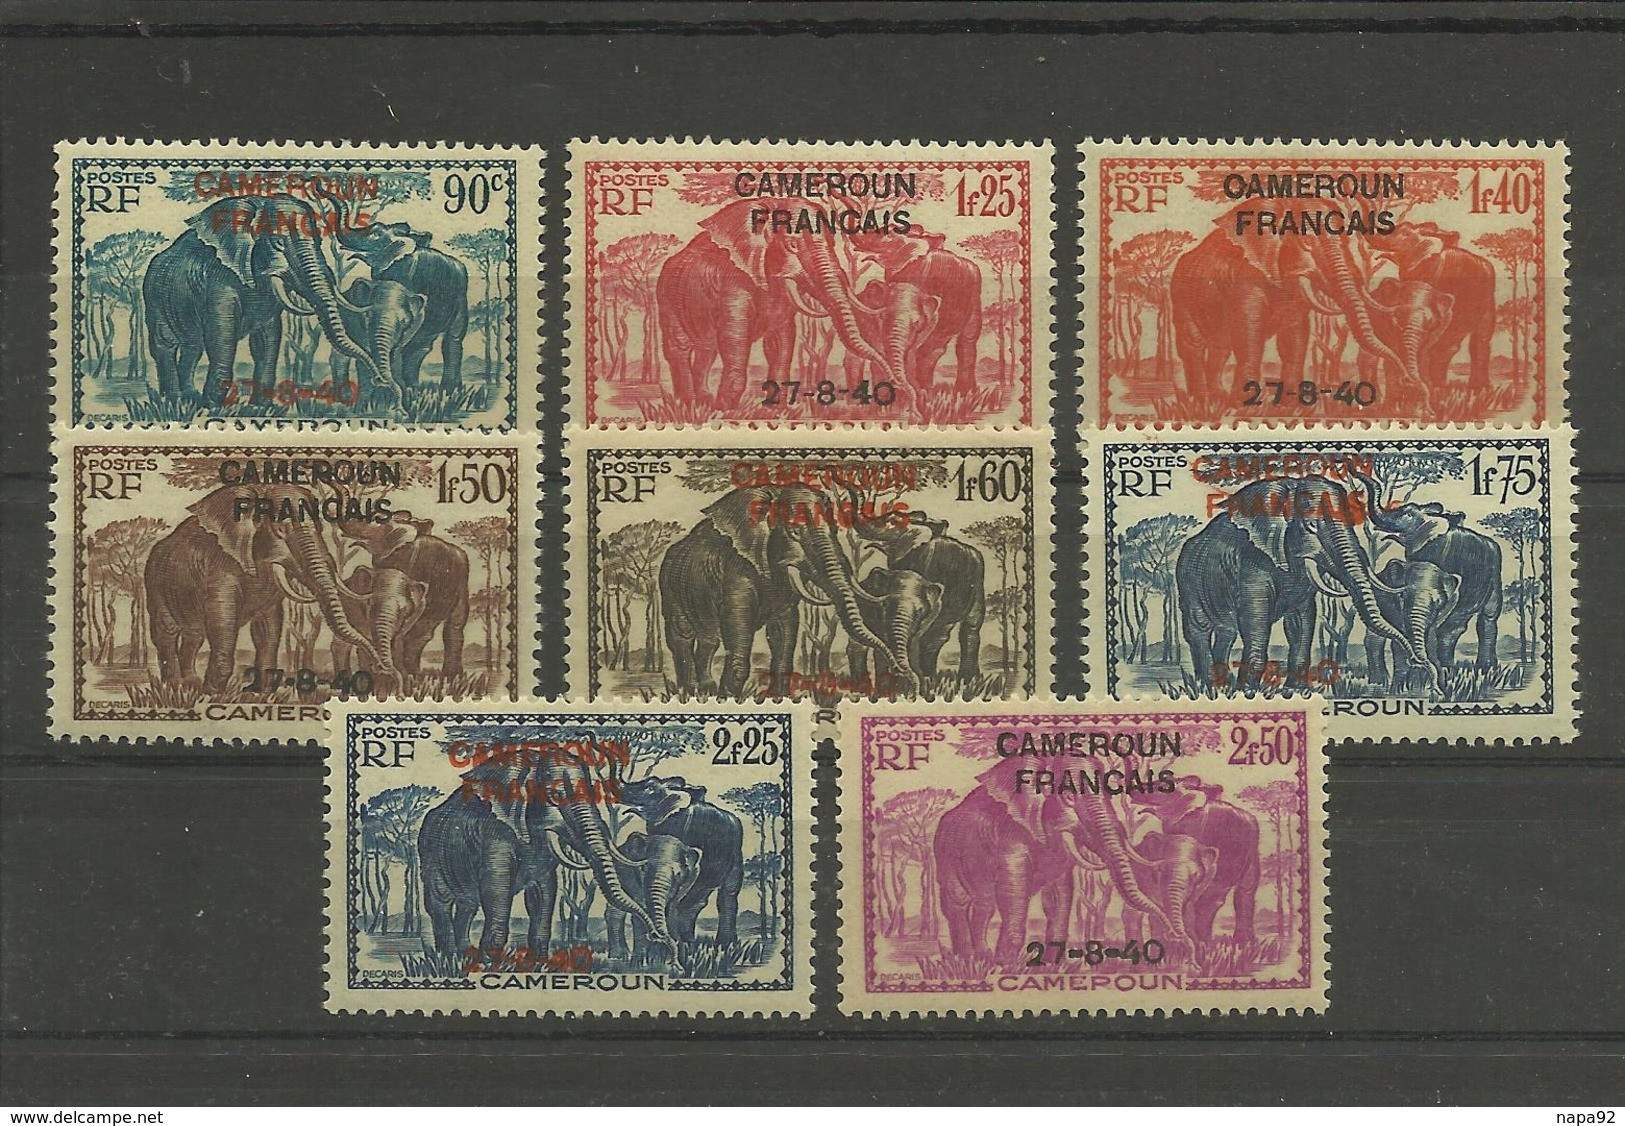 CAMEROUN 1940 YT 222/229** - SURCHARGE "CAMEROUN FRANCAIS 27-8-40" - ELEPHANTS - Ungebraucht